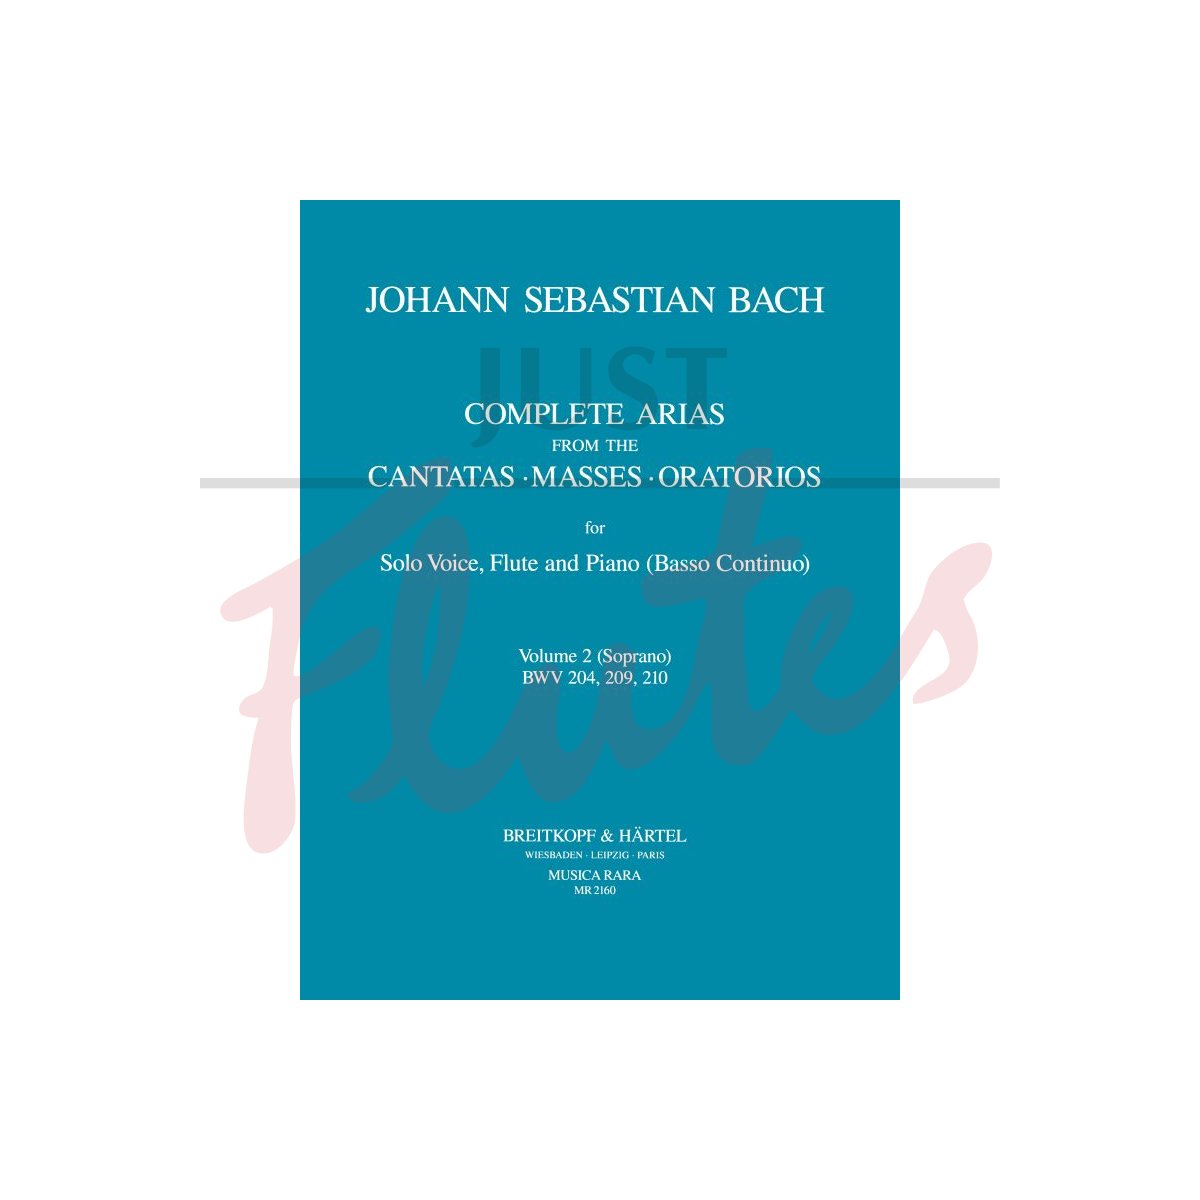 Complete Arias from the Cantatas, Masses &amp; Oratorios [Soprano, Flute, Continuo]